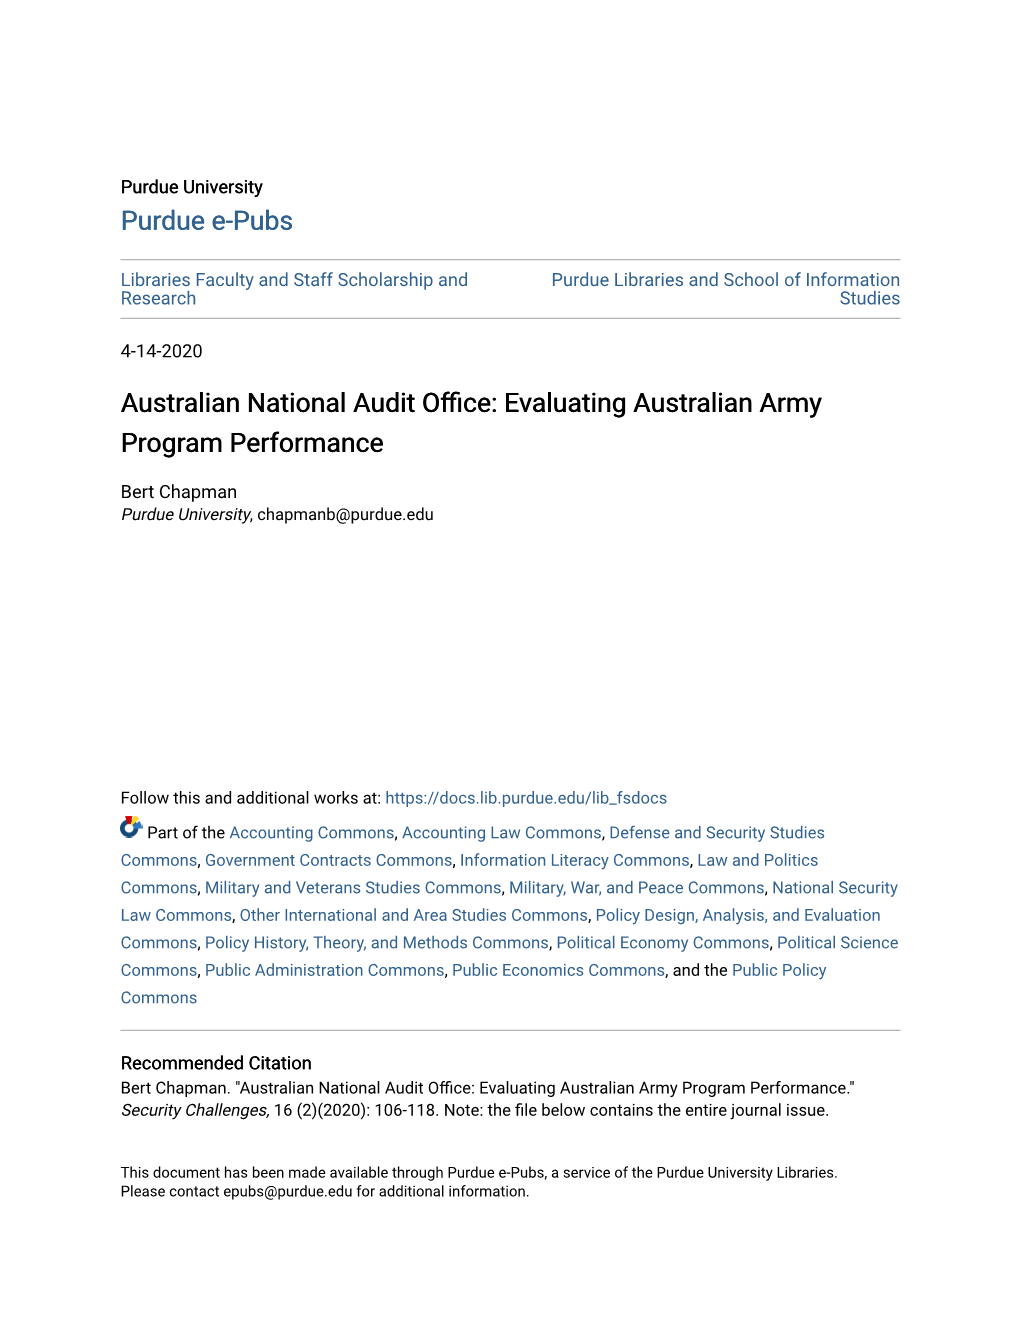 Evaluating Australian Army Program Performance 106